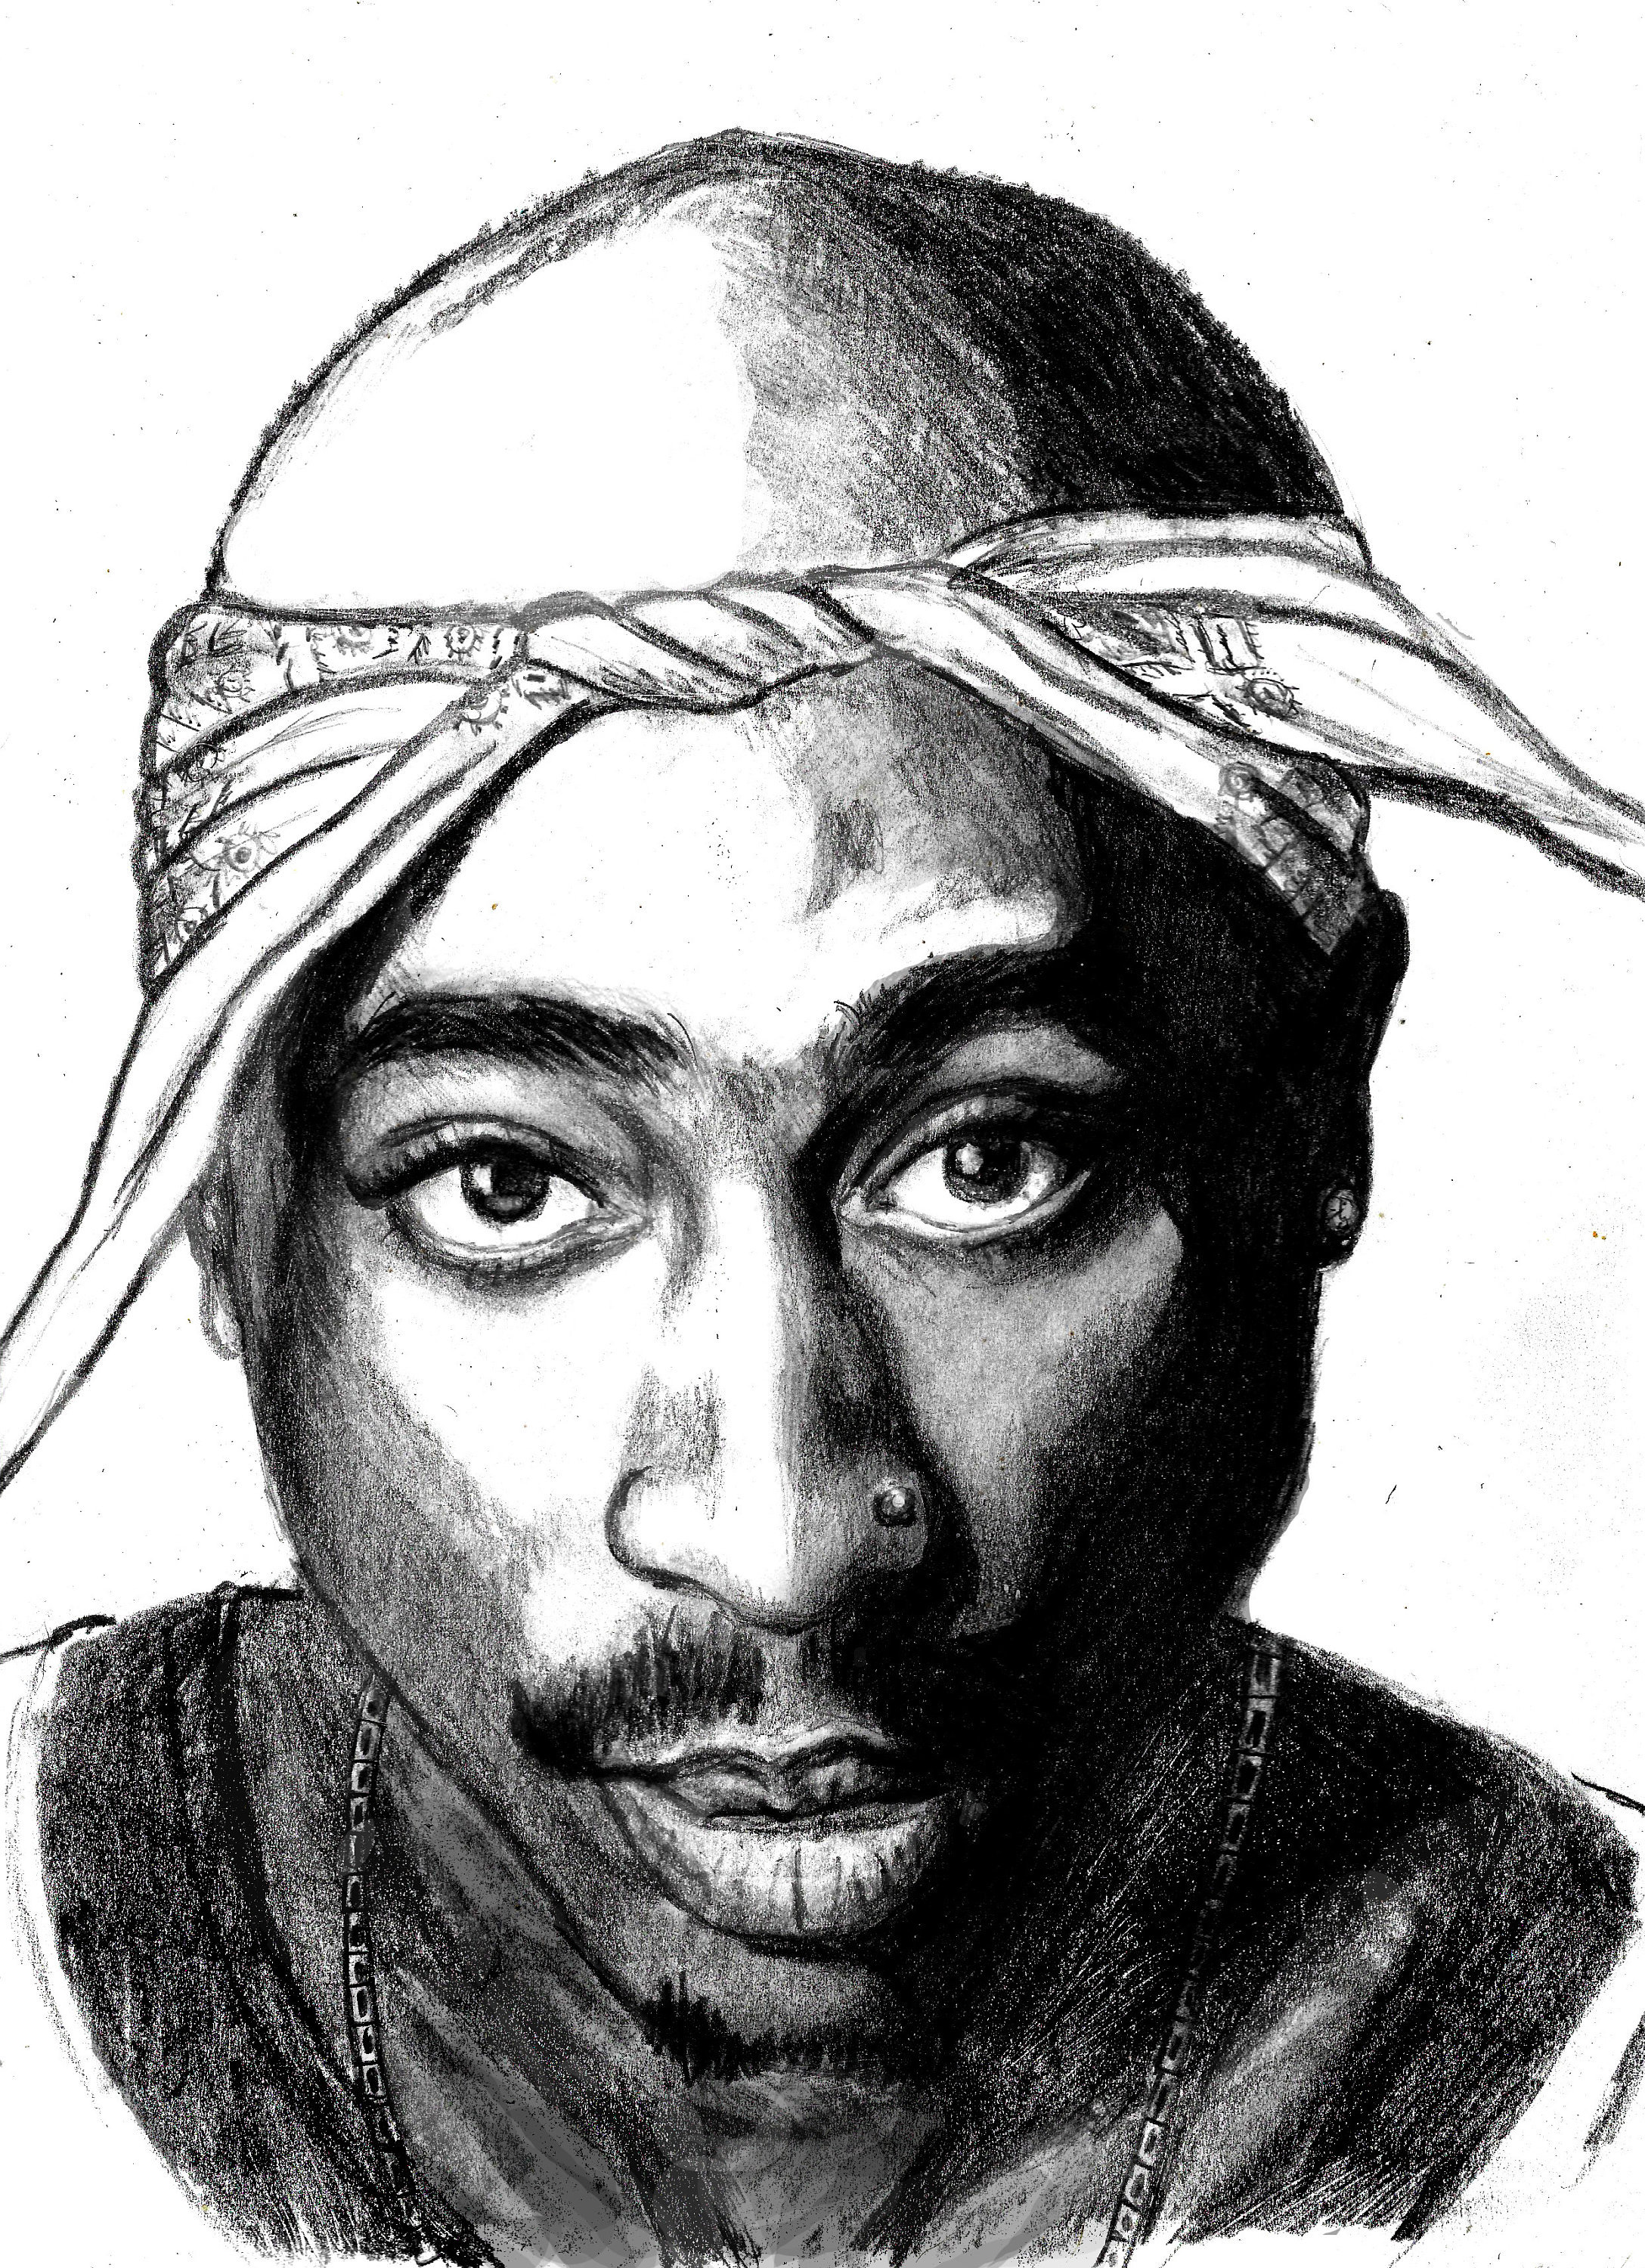 Tupac Shakur print from original pencil drawing 2pac | Etsy